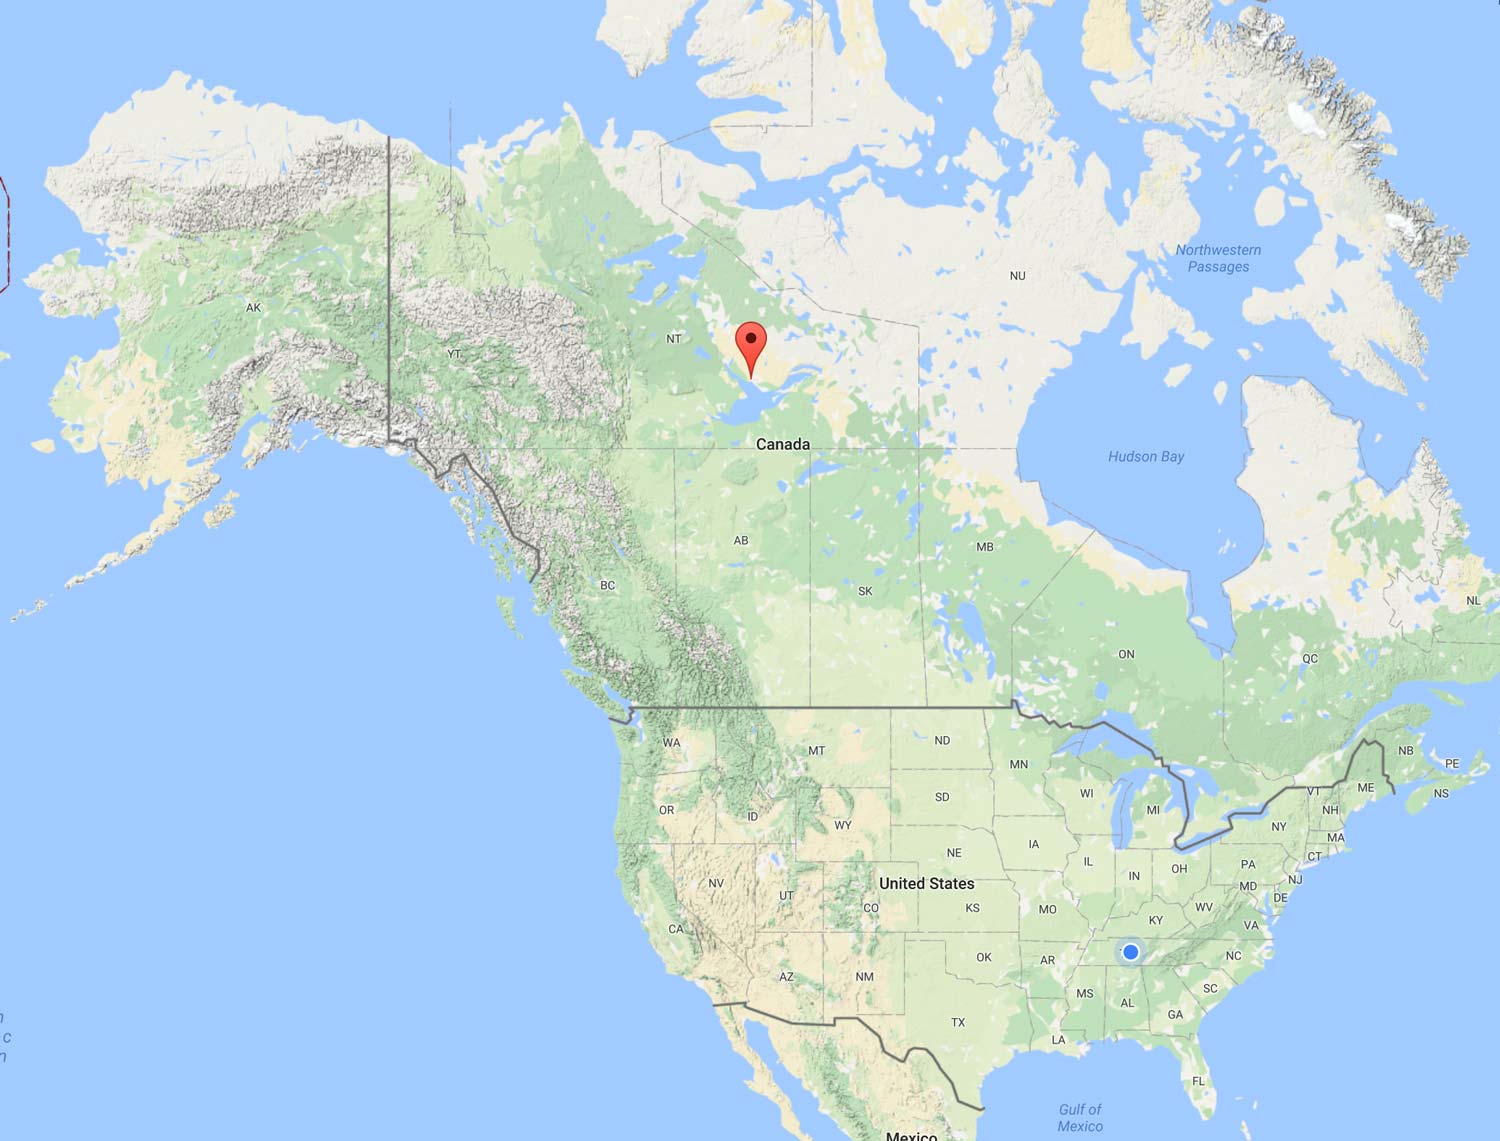 Yellowknife map